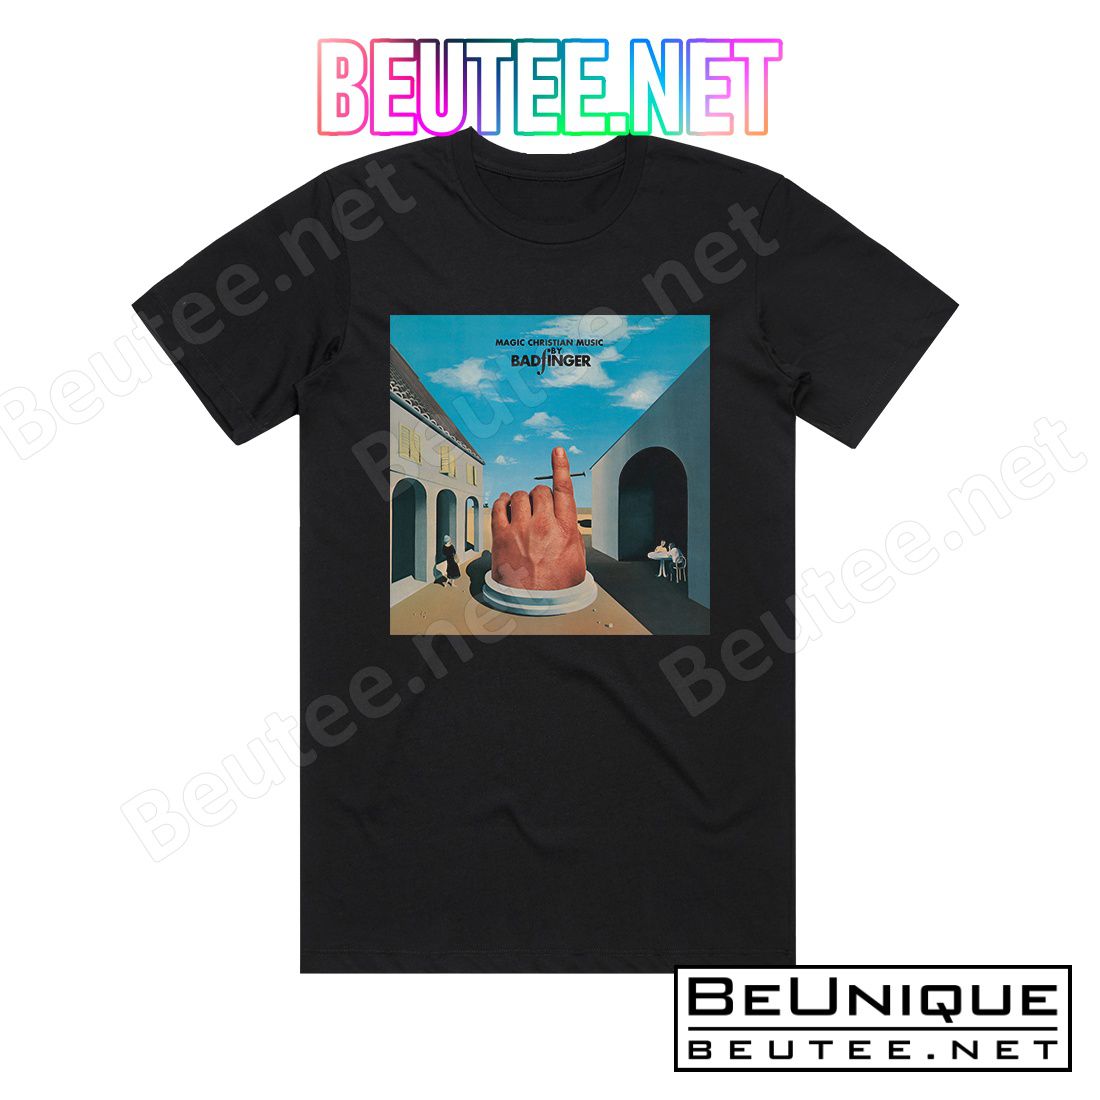 Badfinger Magic Christian Music Album Cover T-Shirt